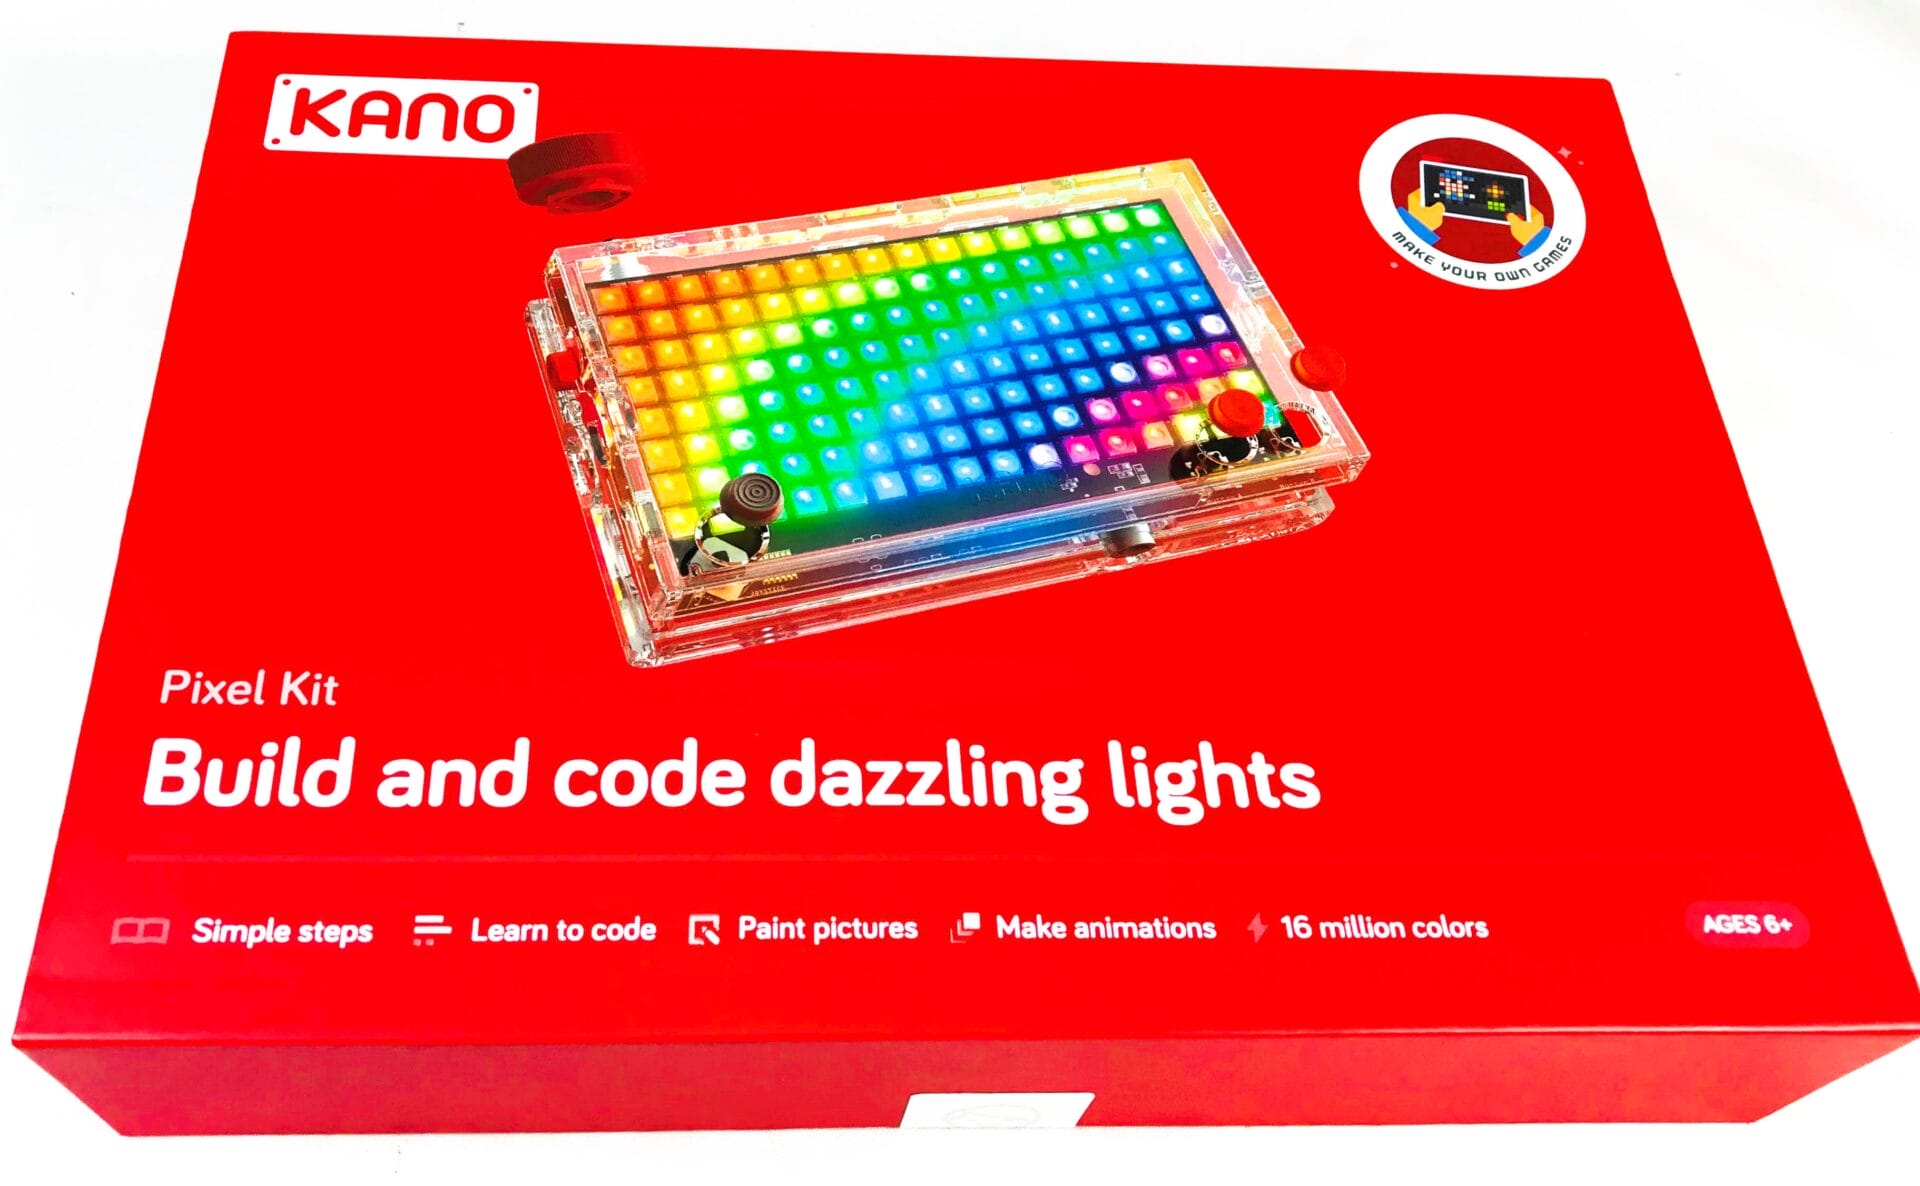 Details about   Kano Pixel Kit Make & Code Dazzling Lights wireless lightboard learn 1003 